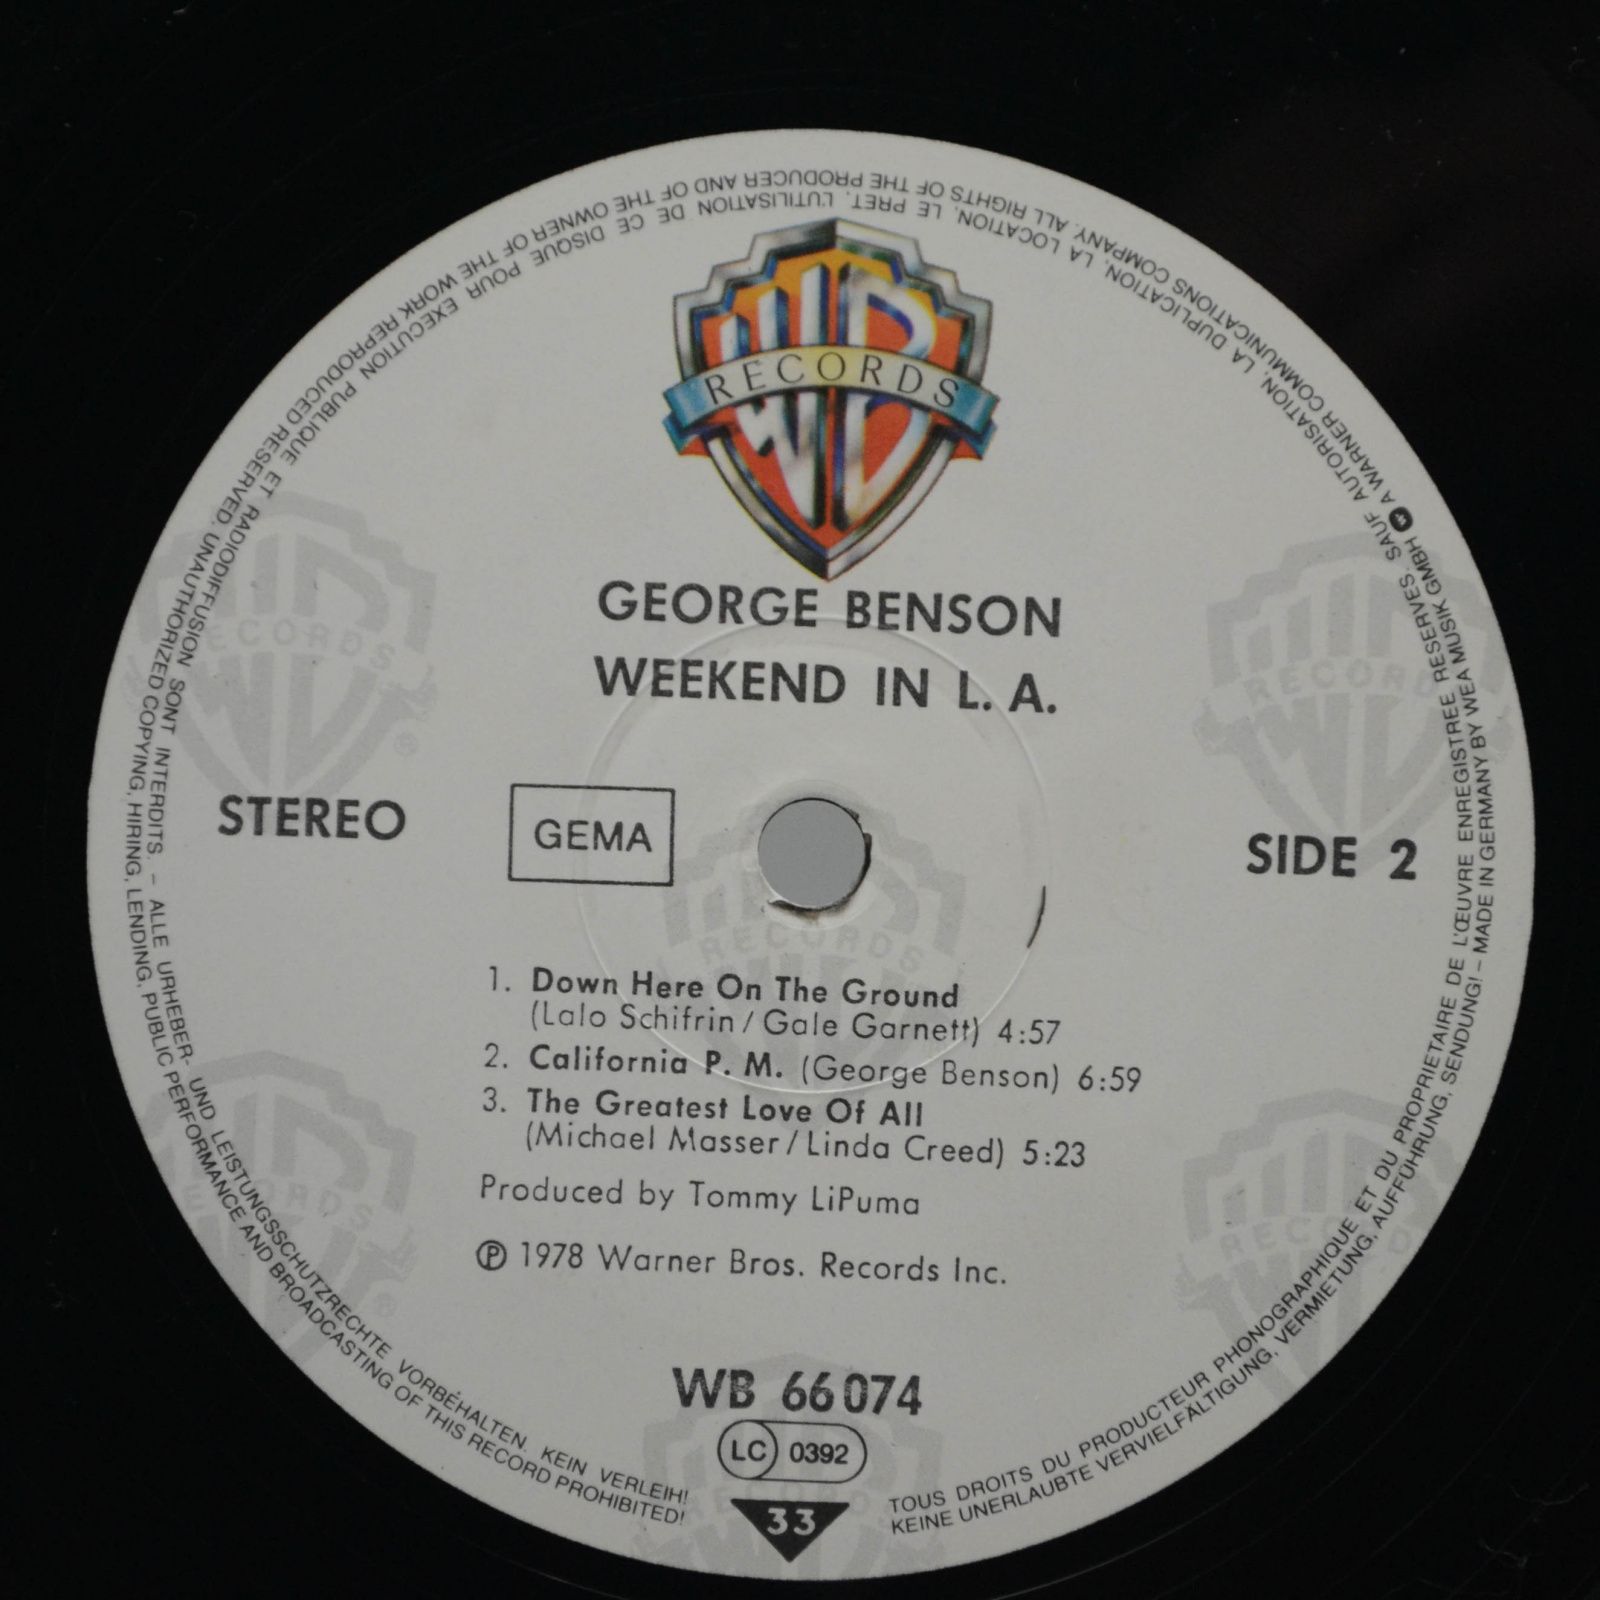 George Benson — Weekend In L.A. (2LP), 1978